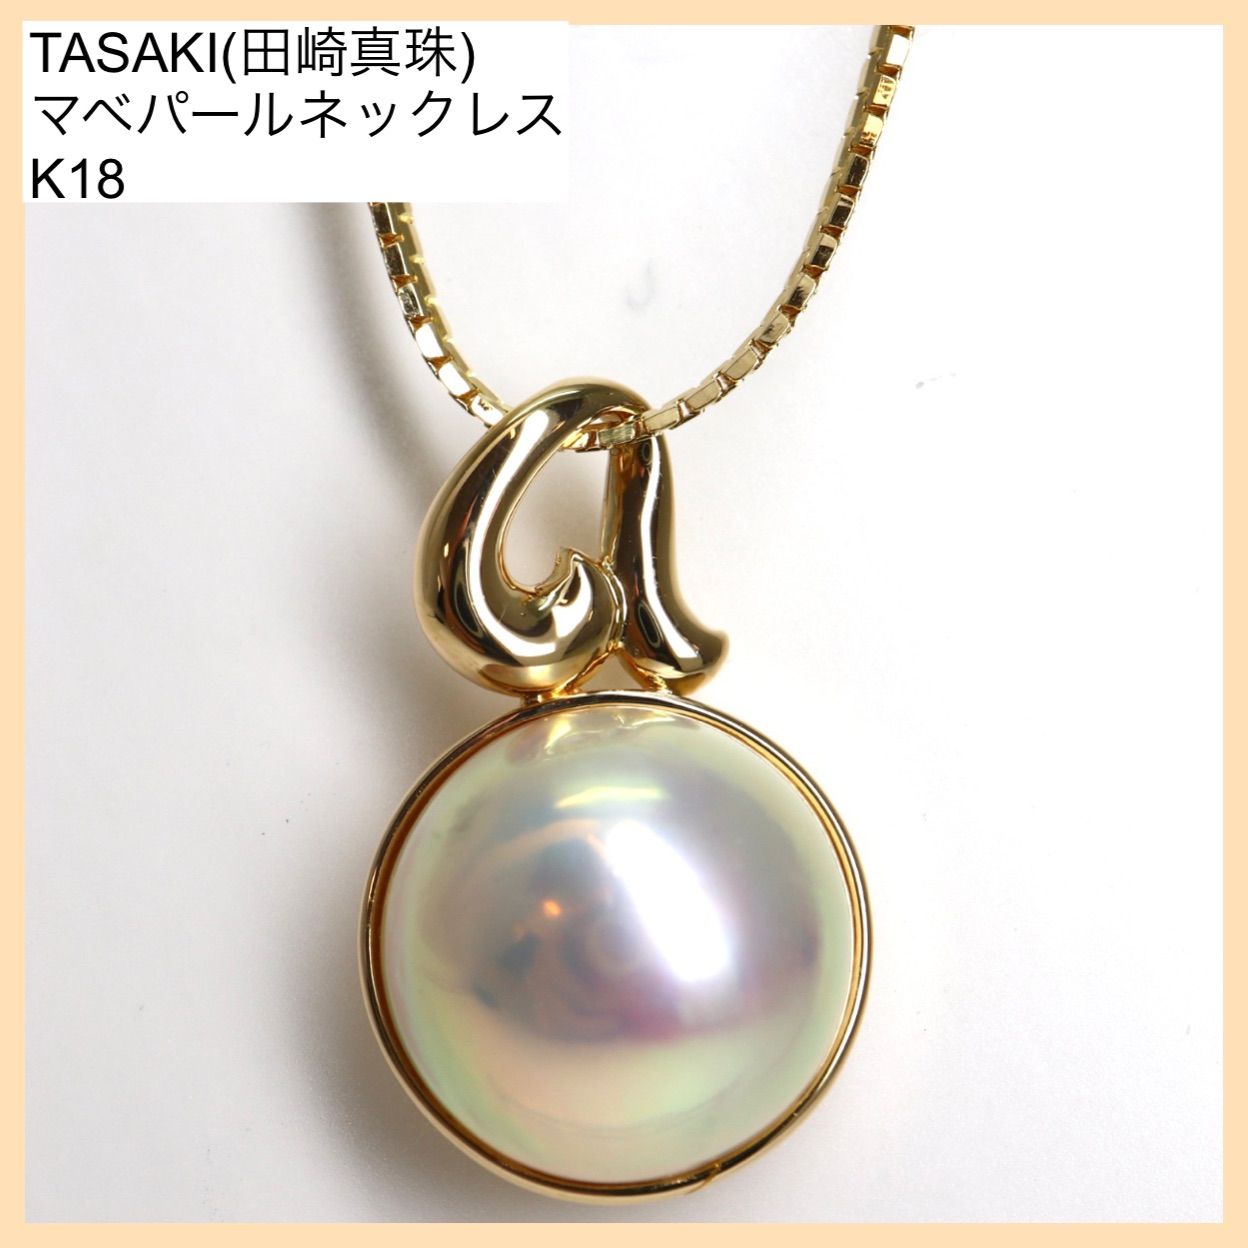 E664 田崎真珠 K18 マベパール ダイヤ ネックレス 14g TASAKI - ネックレス